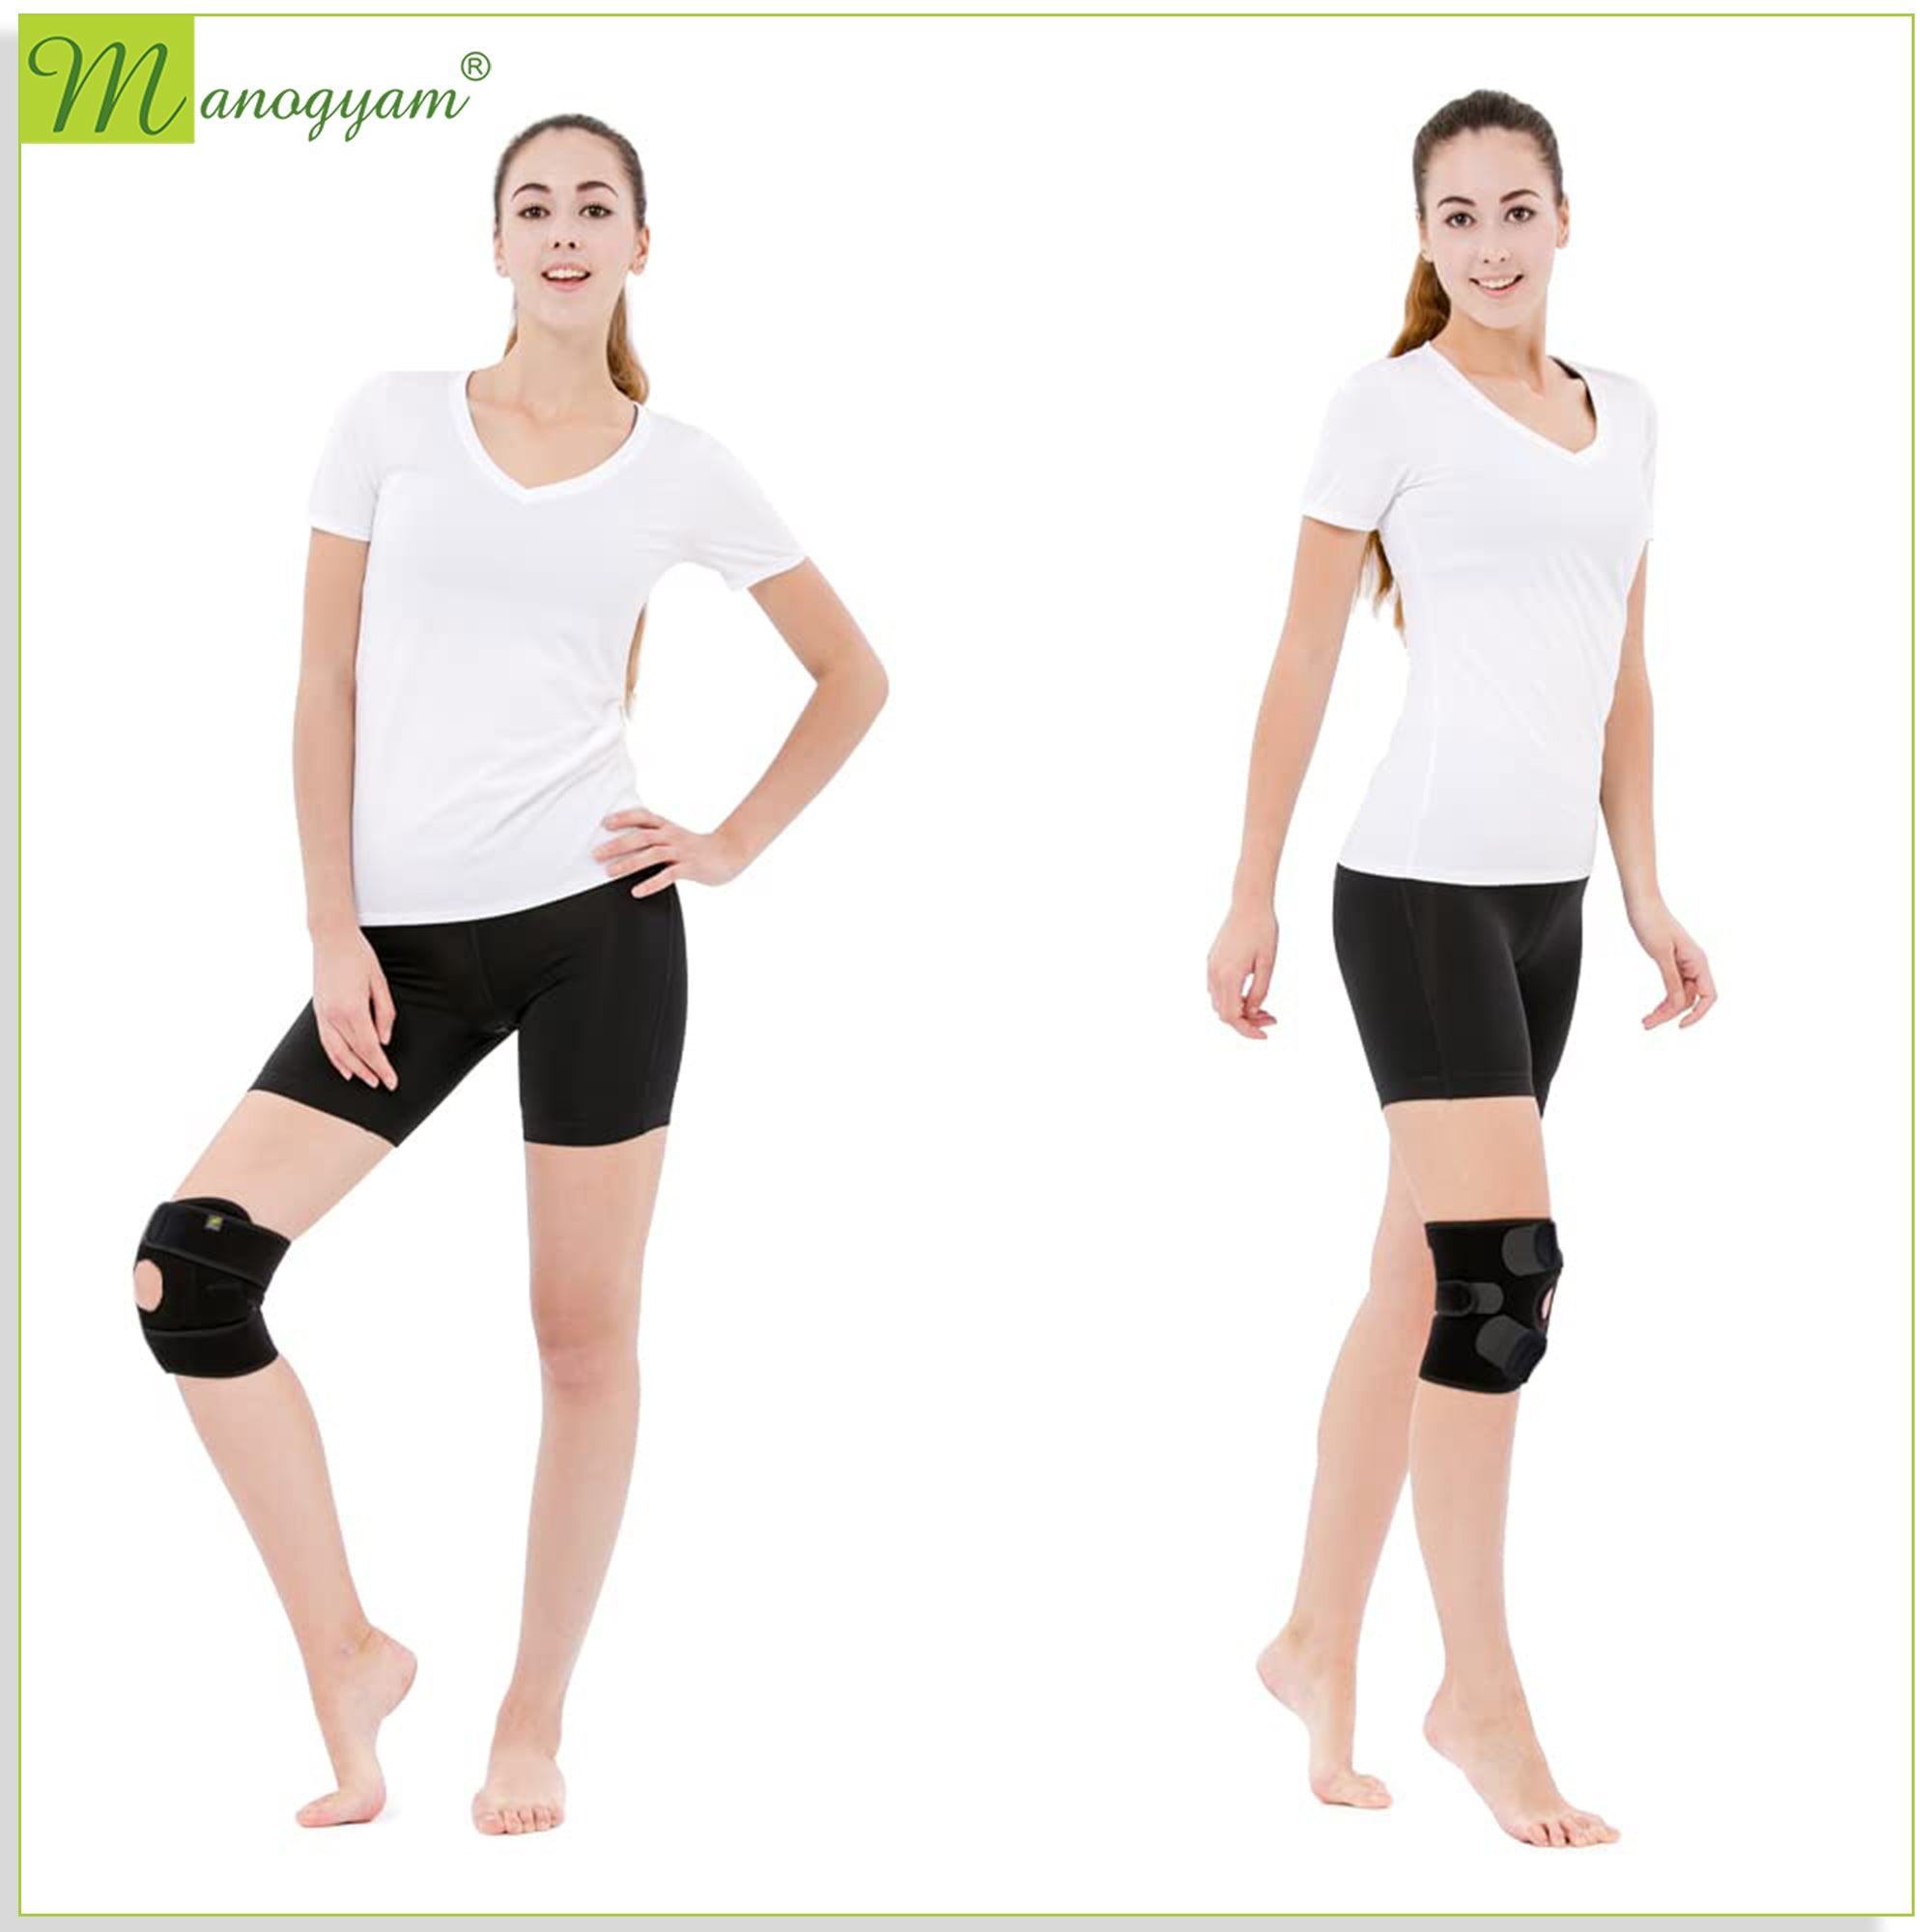 Manogyam FlexiKnee Support: Ergonomic Compression Knee Cap for Joint Pain Relief